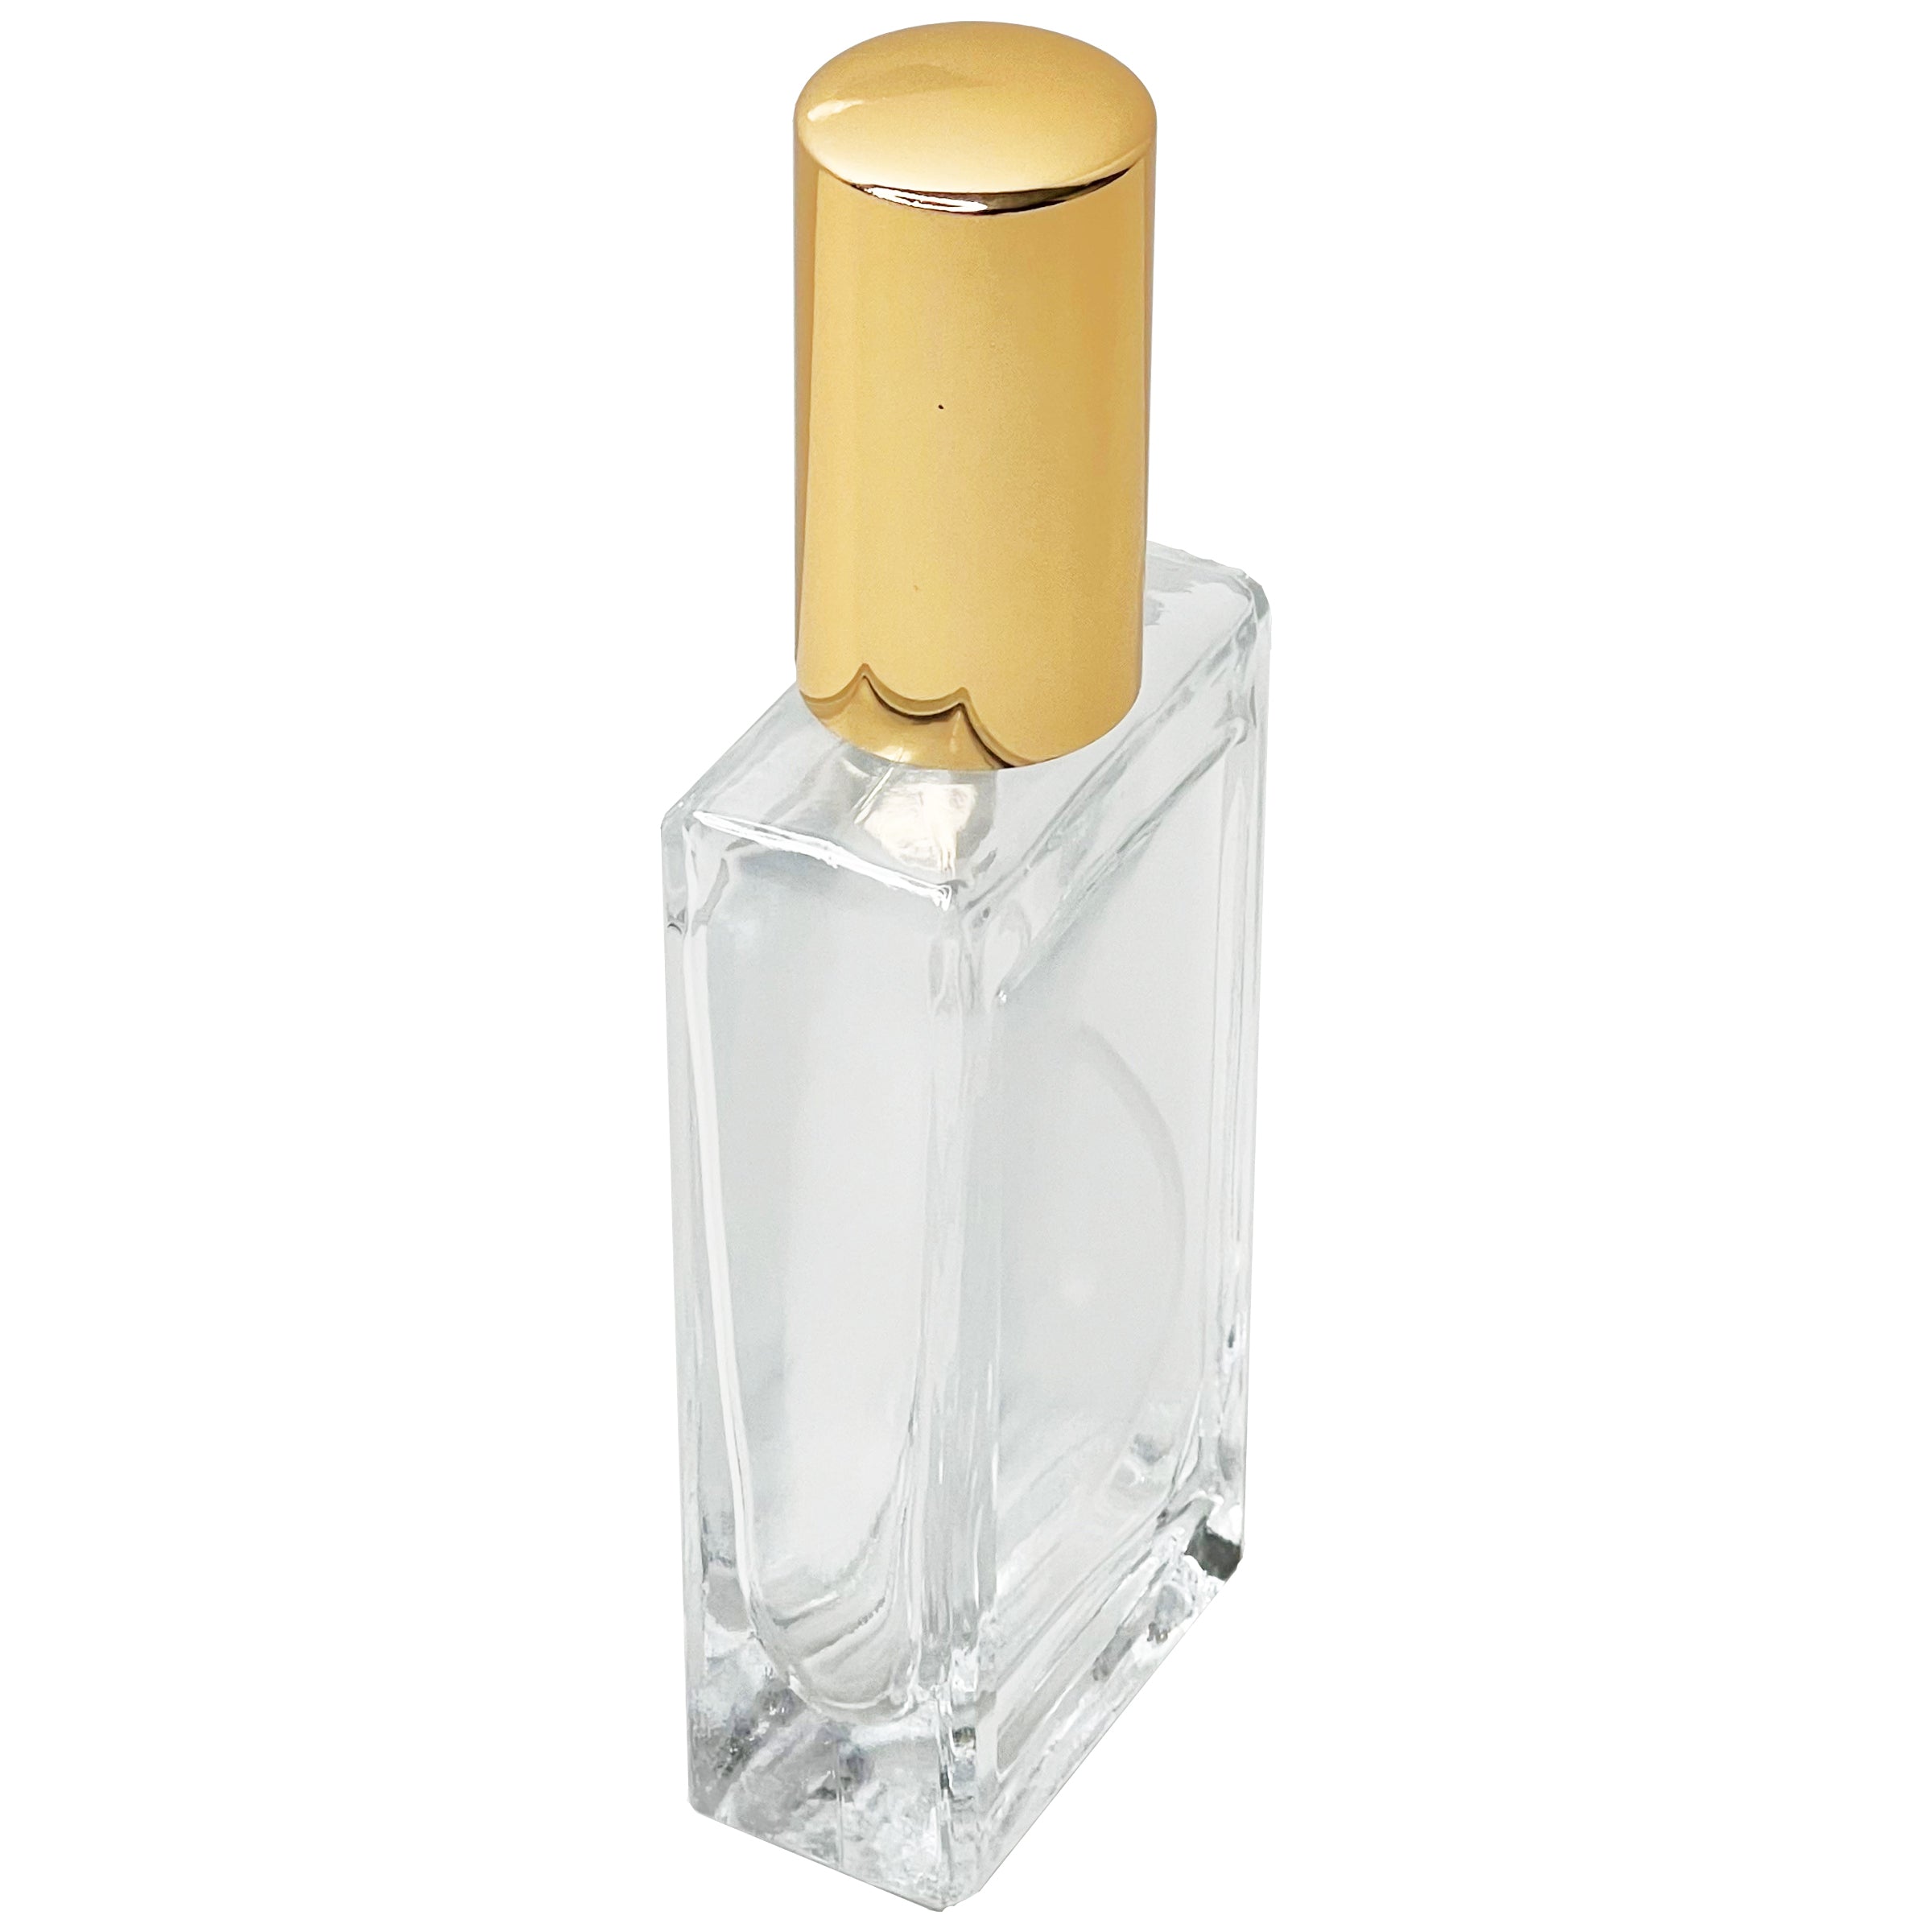 50ml 1.7oz thick glass rectangle perfume bottles 18mm gold sprayers